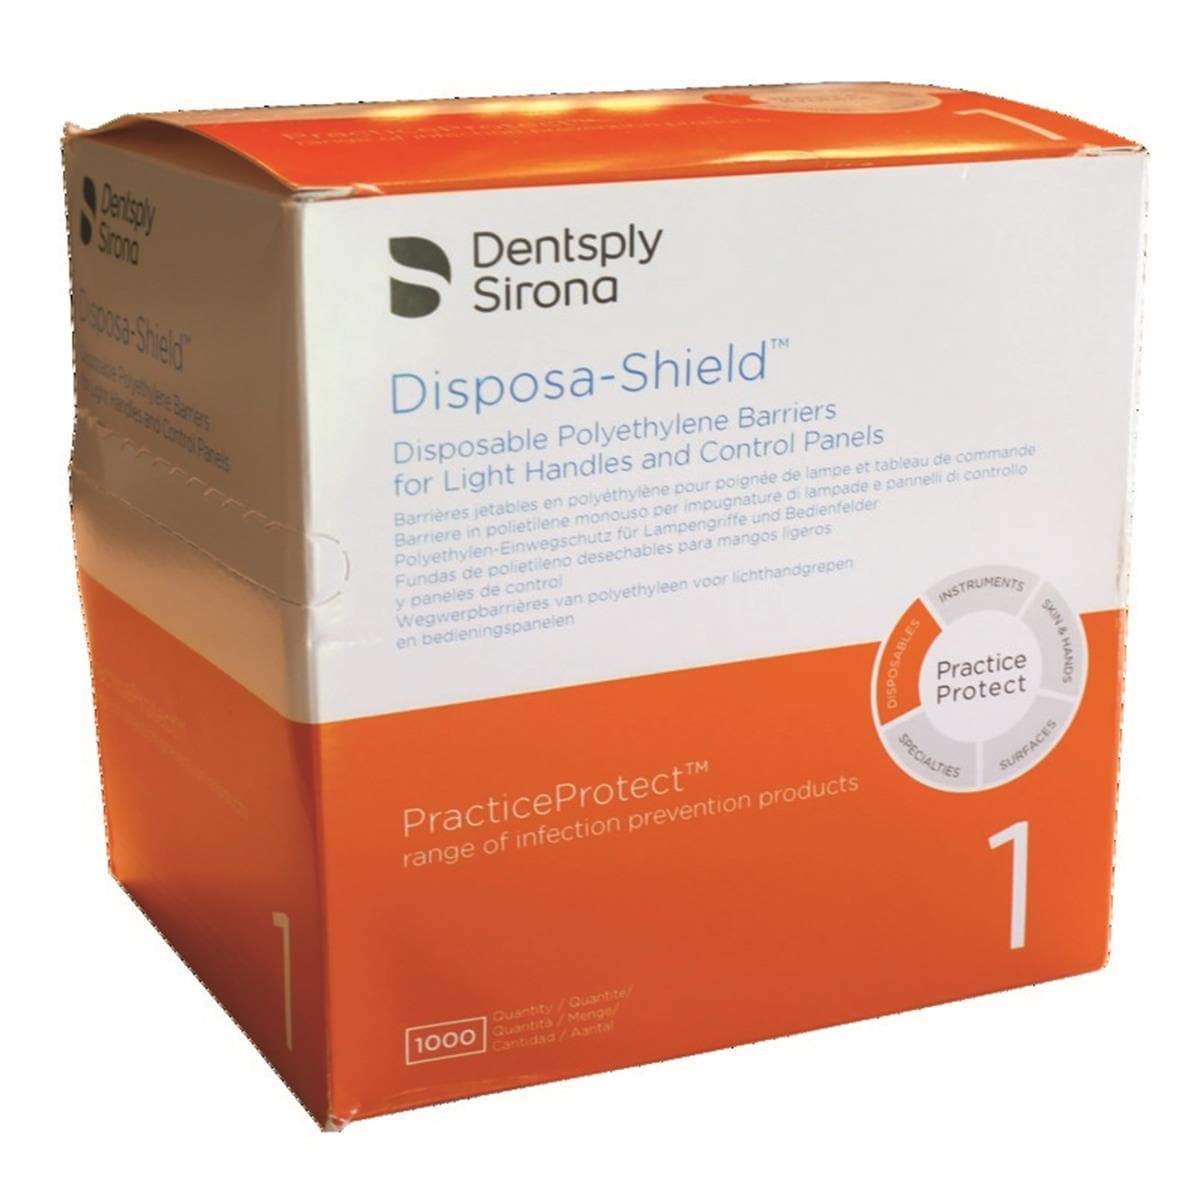 Disposa Shield Teinte NO.1 (1000) Dentsply Sirona